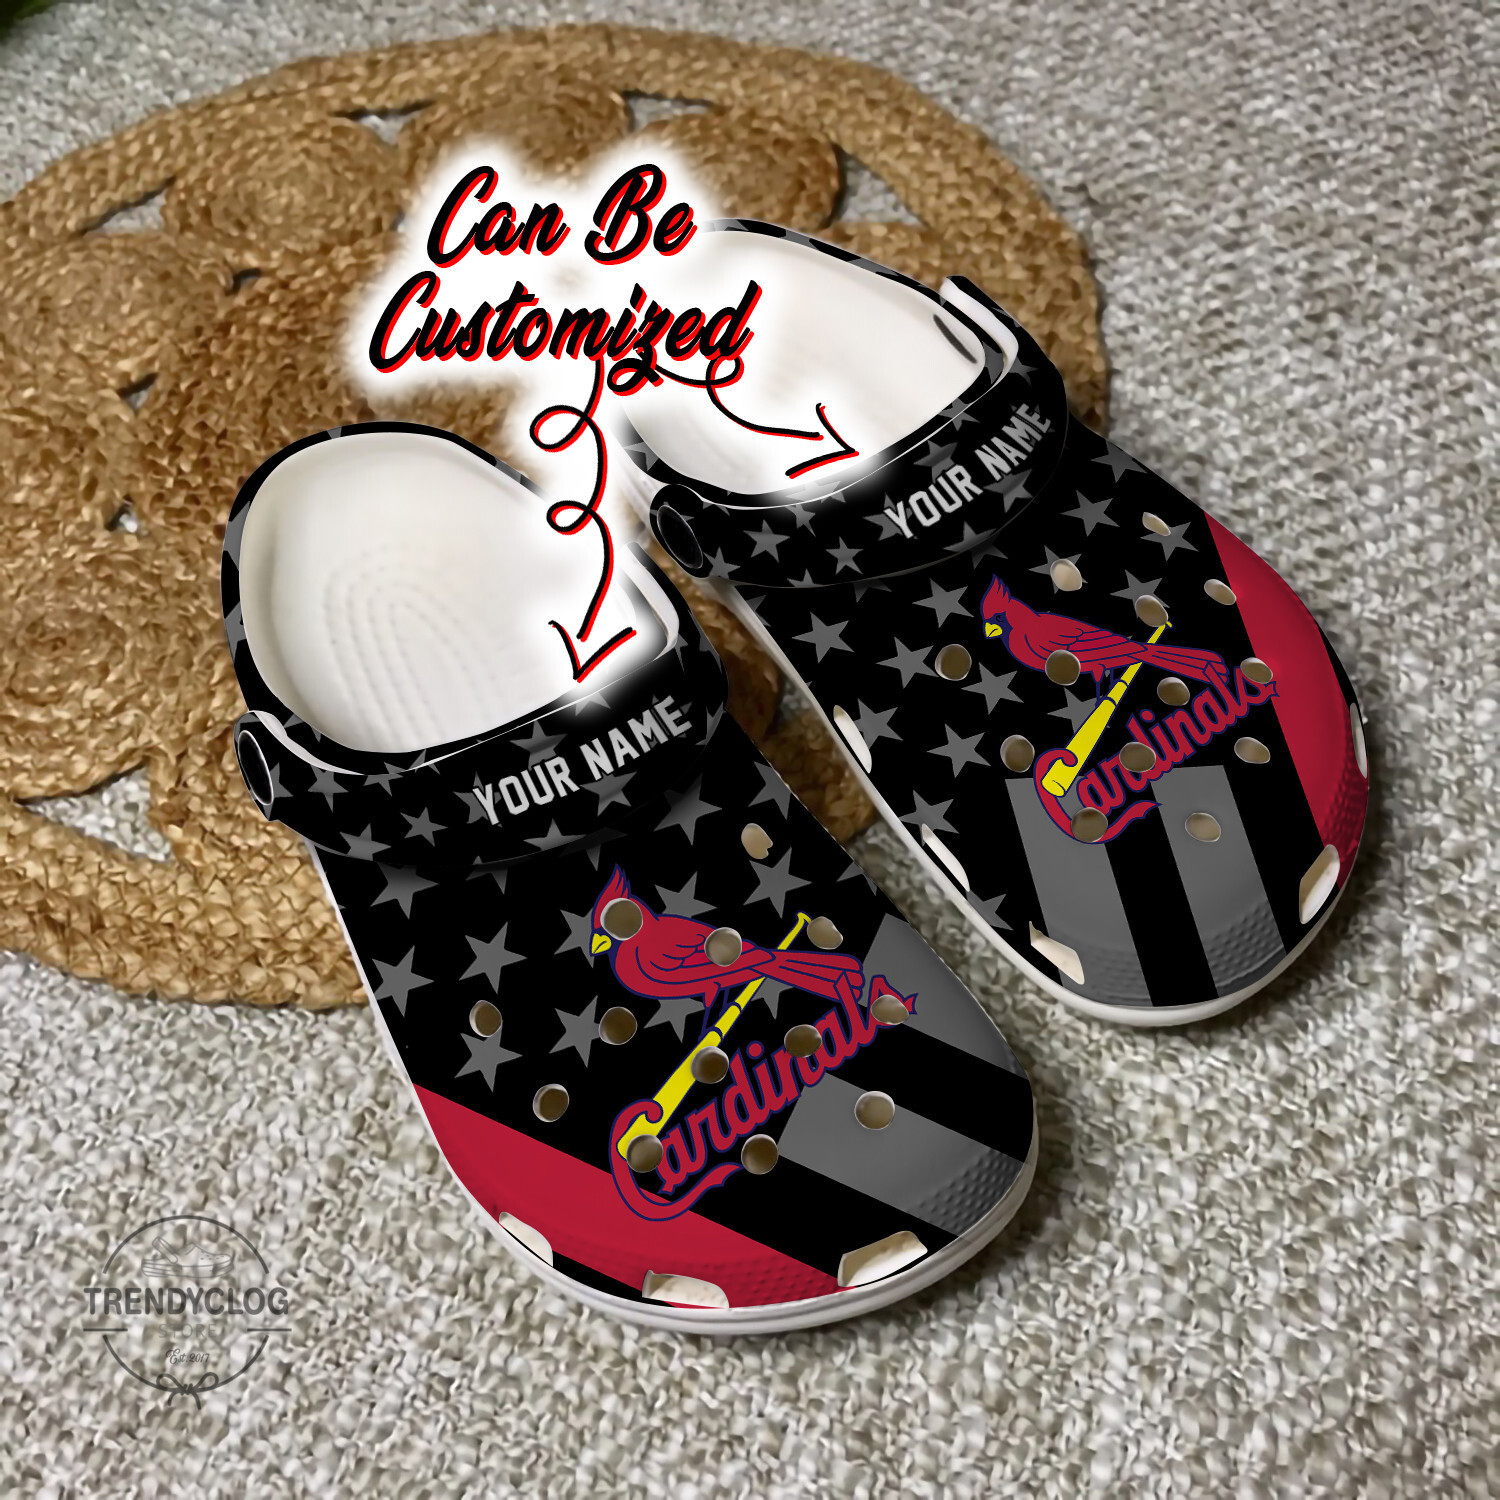 Baseball Crocs Personalized Stl Cardinals Star Flag Clog Shoes ...